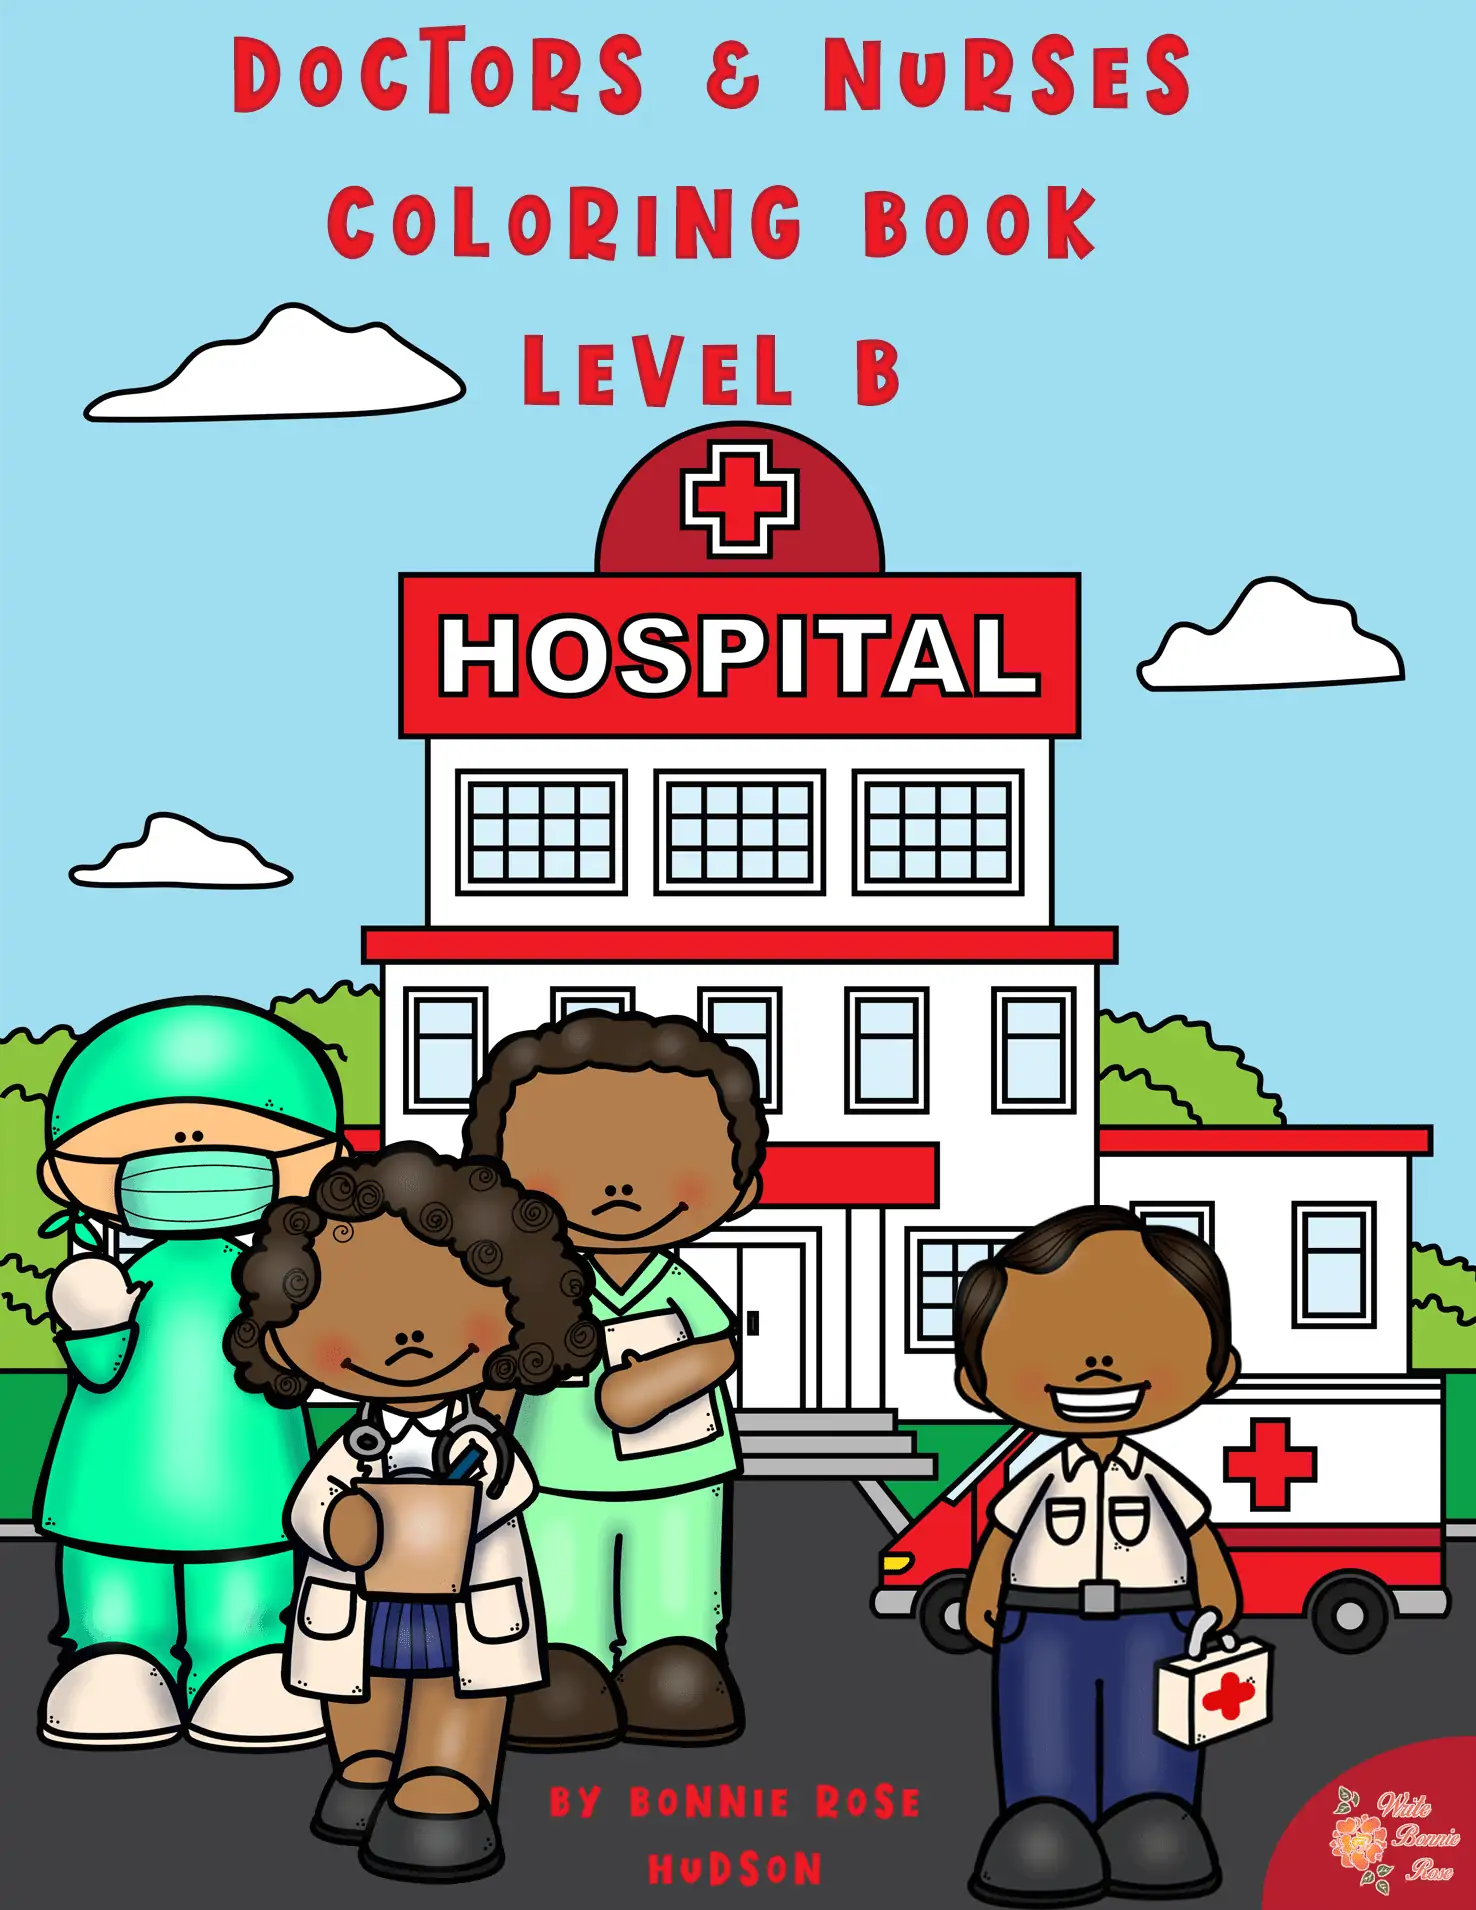 Doctors & Nurses Coloring Book Level B